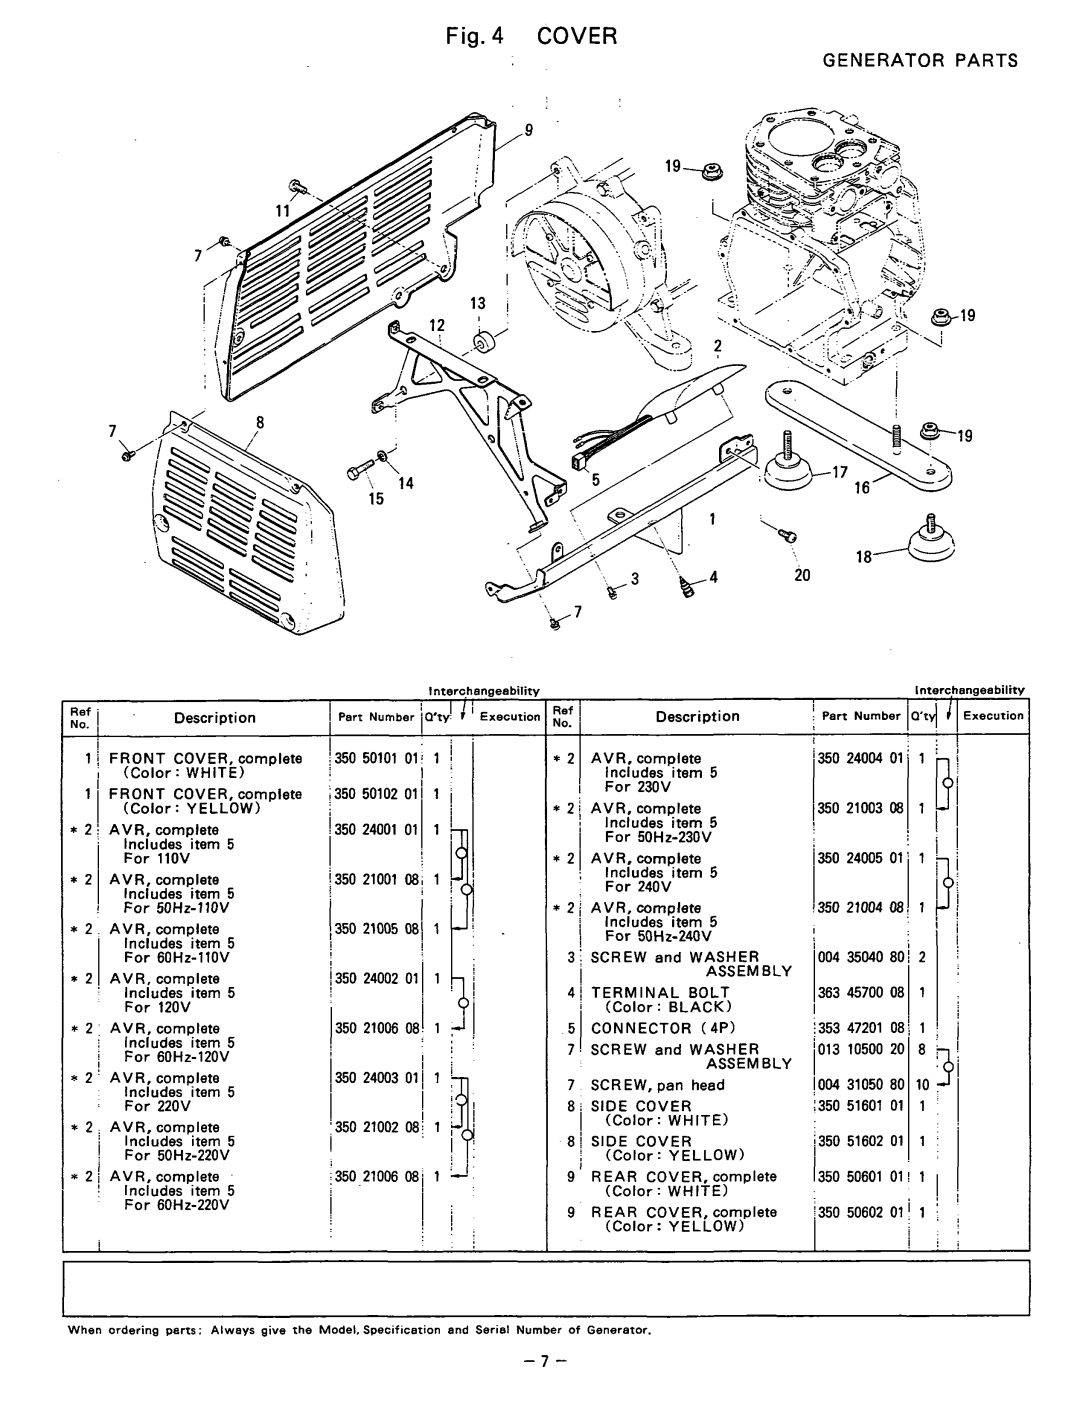 Subaru Robin Power Products R1200 manual Cover, Generator Parts 